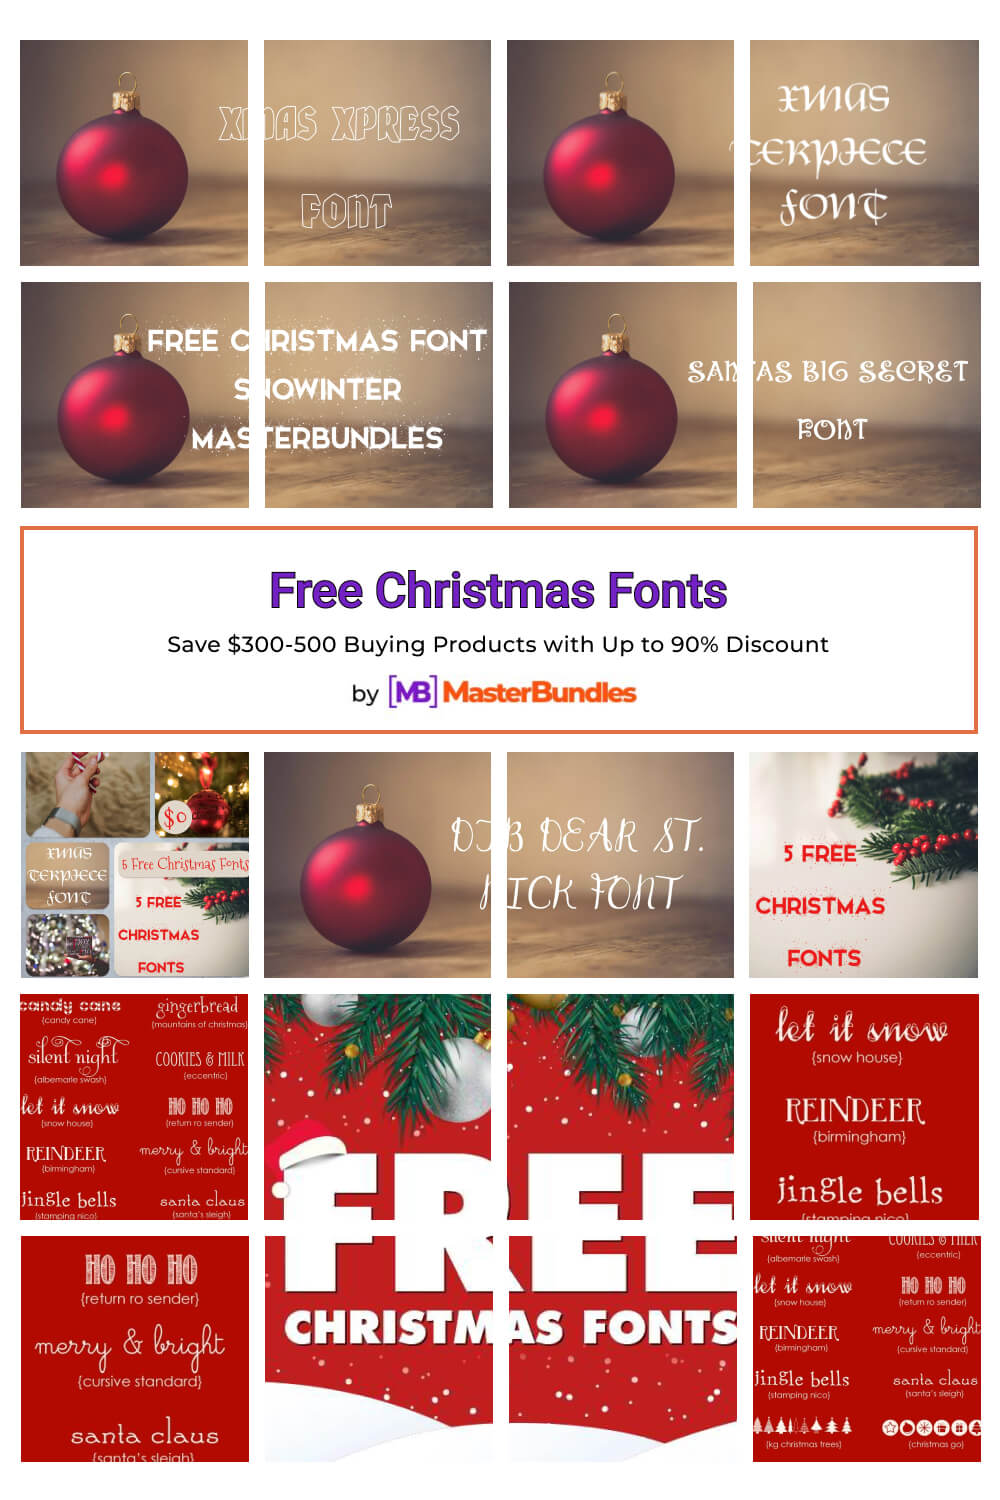 free christmas fonts pinterest image.